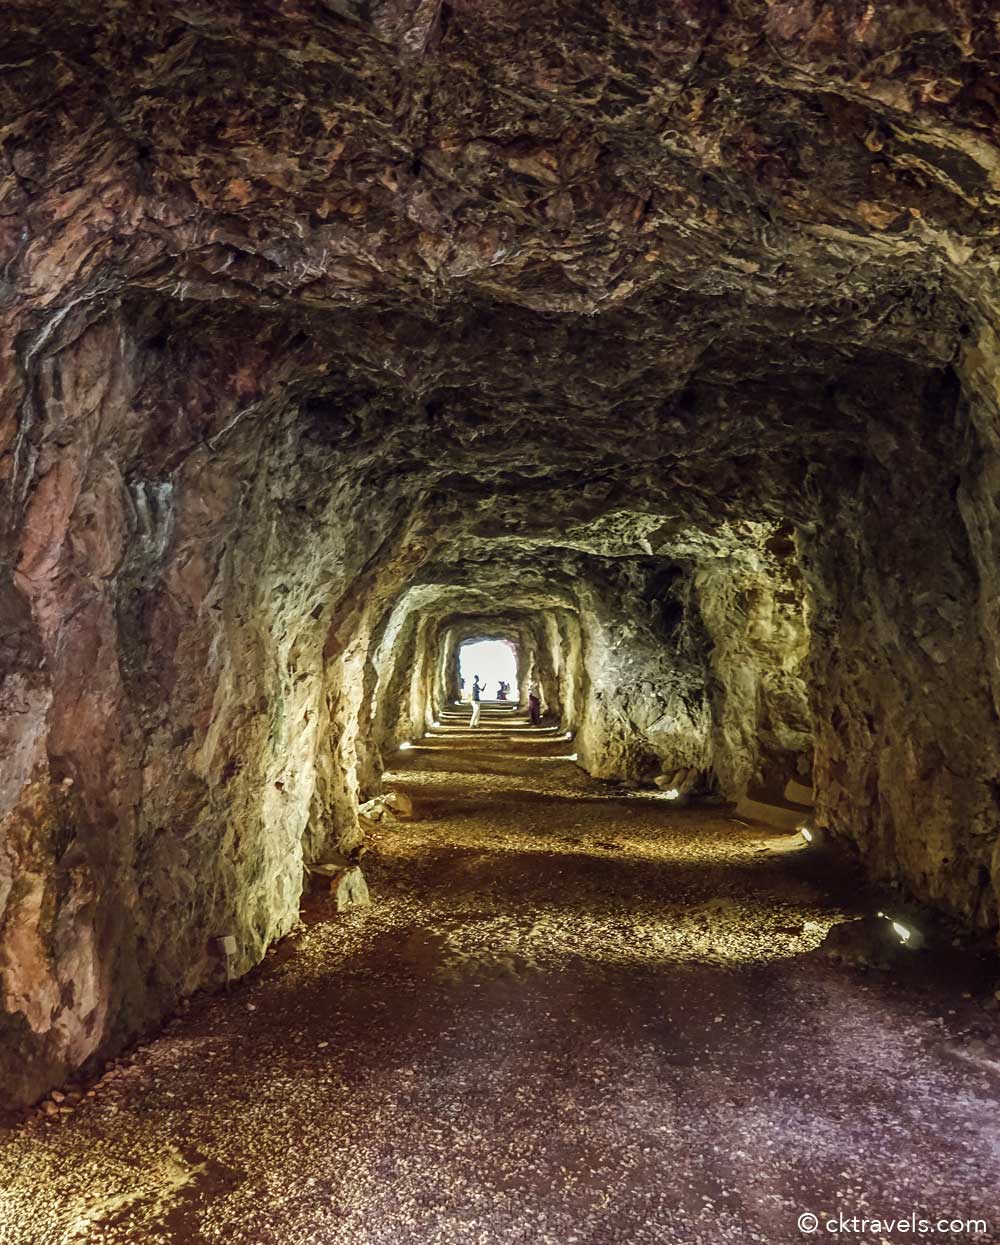 Miners Tunnel Tasik Cermin (Mirror Lake) in Ipoh